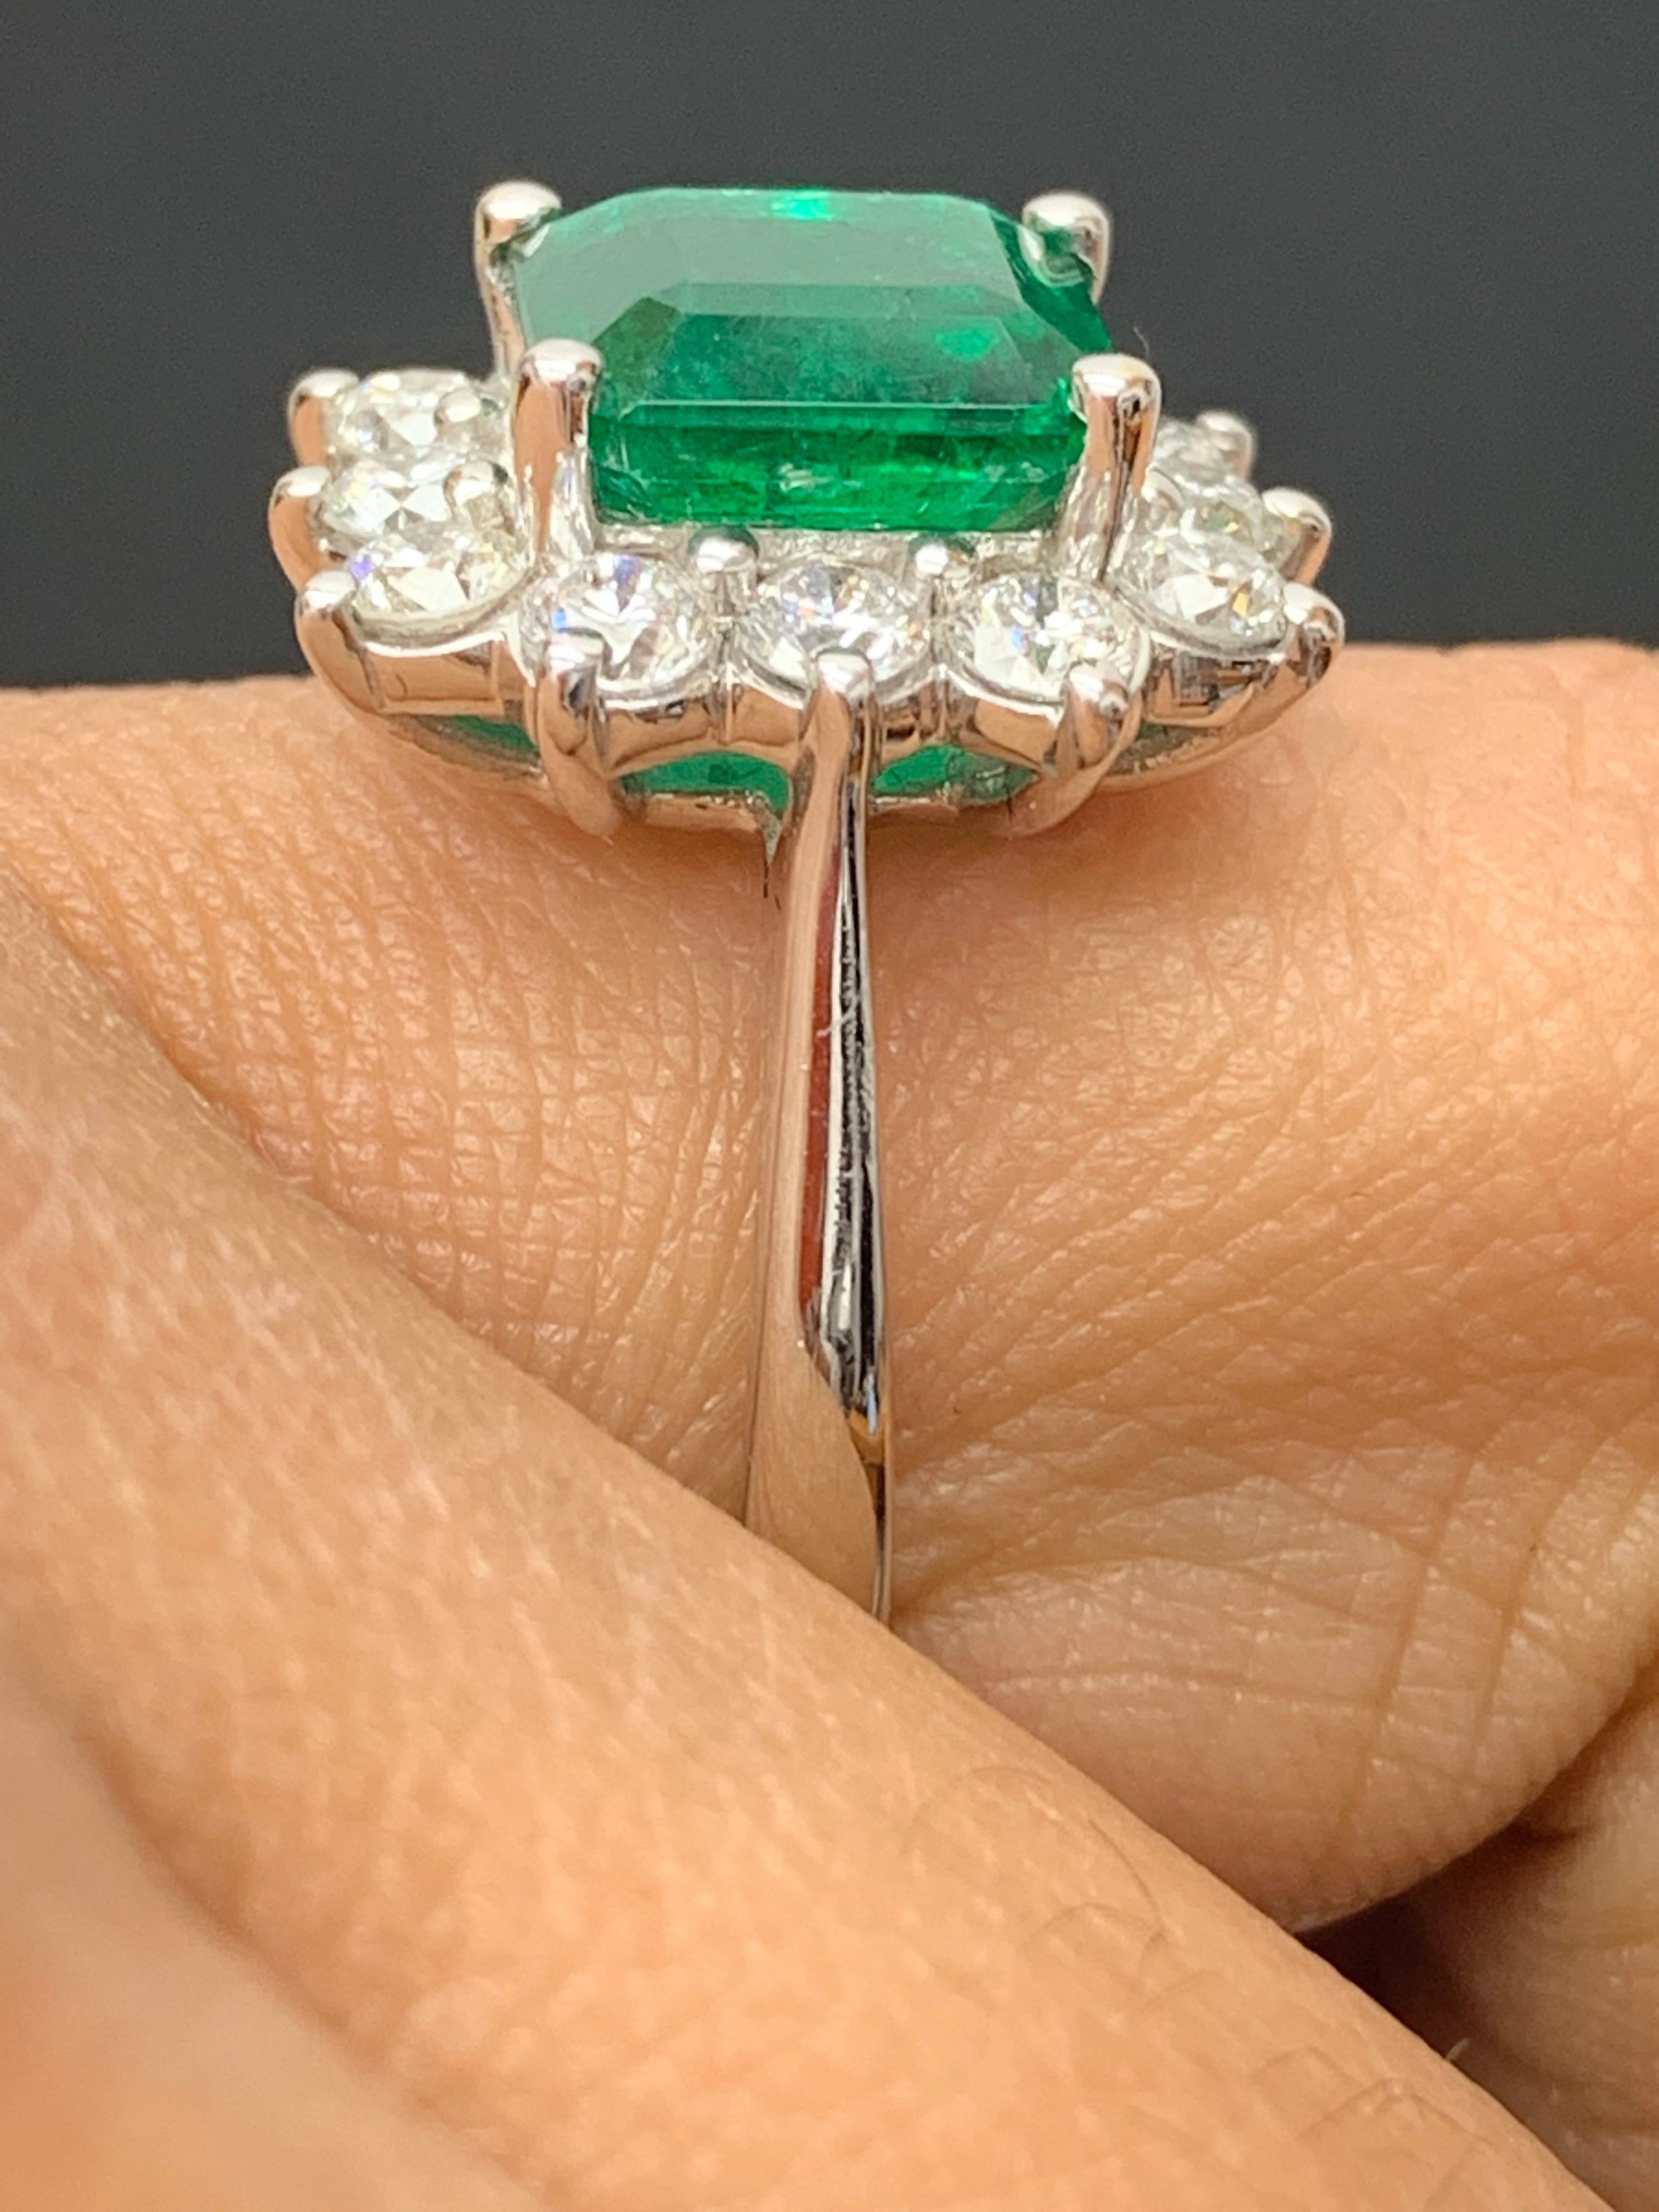 Certified 3.17 Carat Emerald Cut Emerald Diamond Ring in 14K White Gold For Sale 10